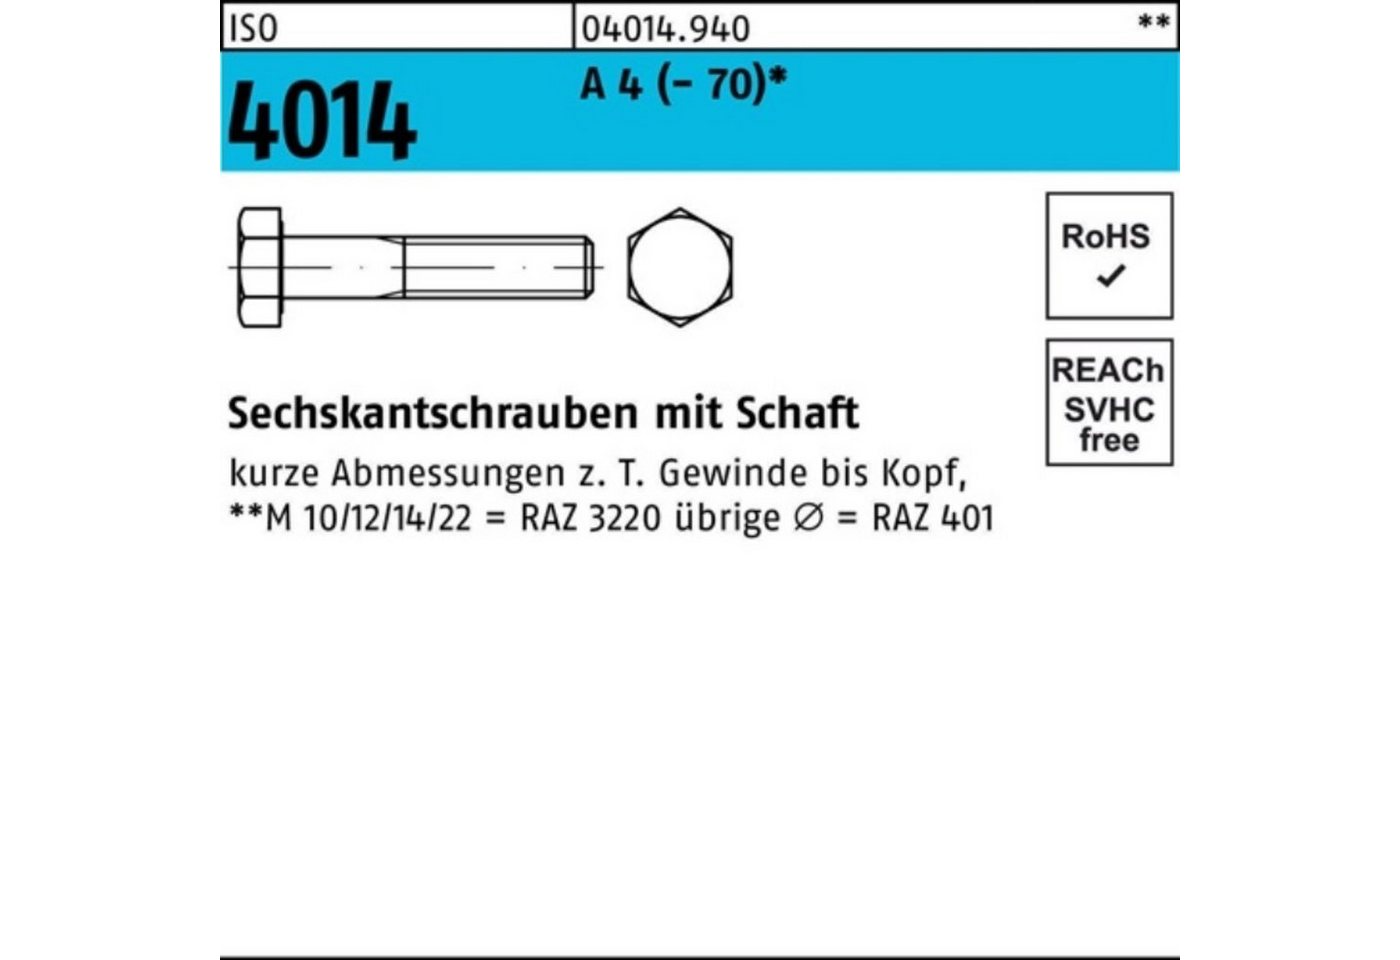 Bufab Sechskantschraube 100er Pack Sechskantschraube ISO 4014 Schaft M10x 190 A 4 (70) 1 St von Bufab